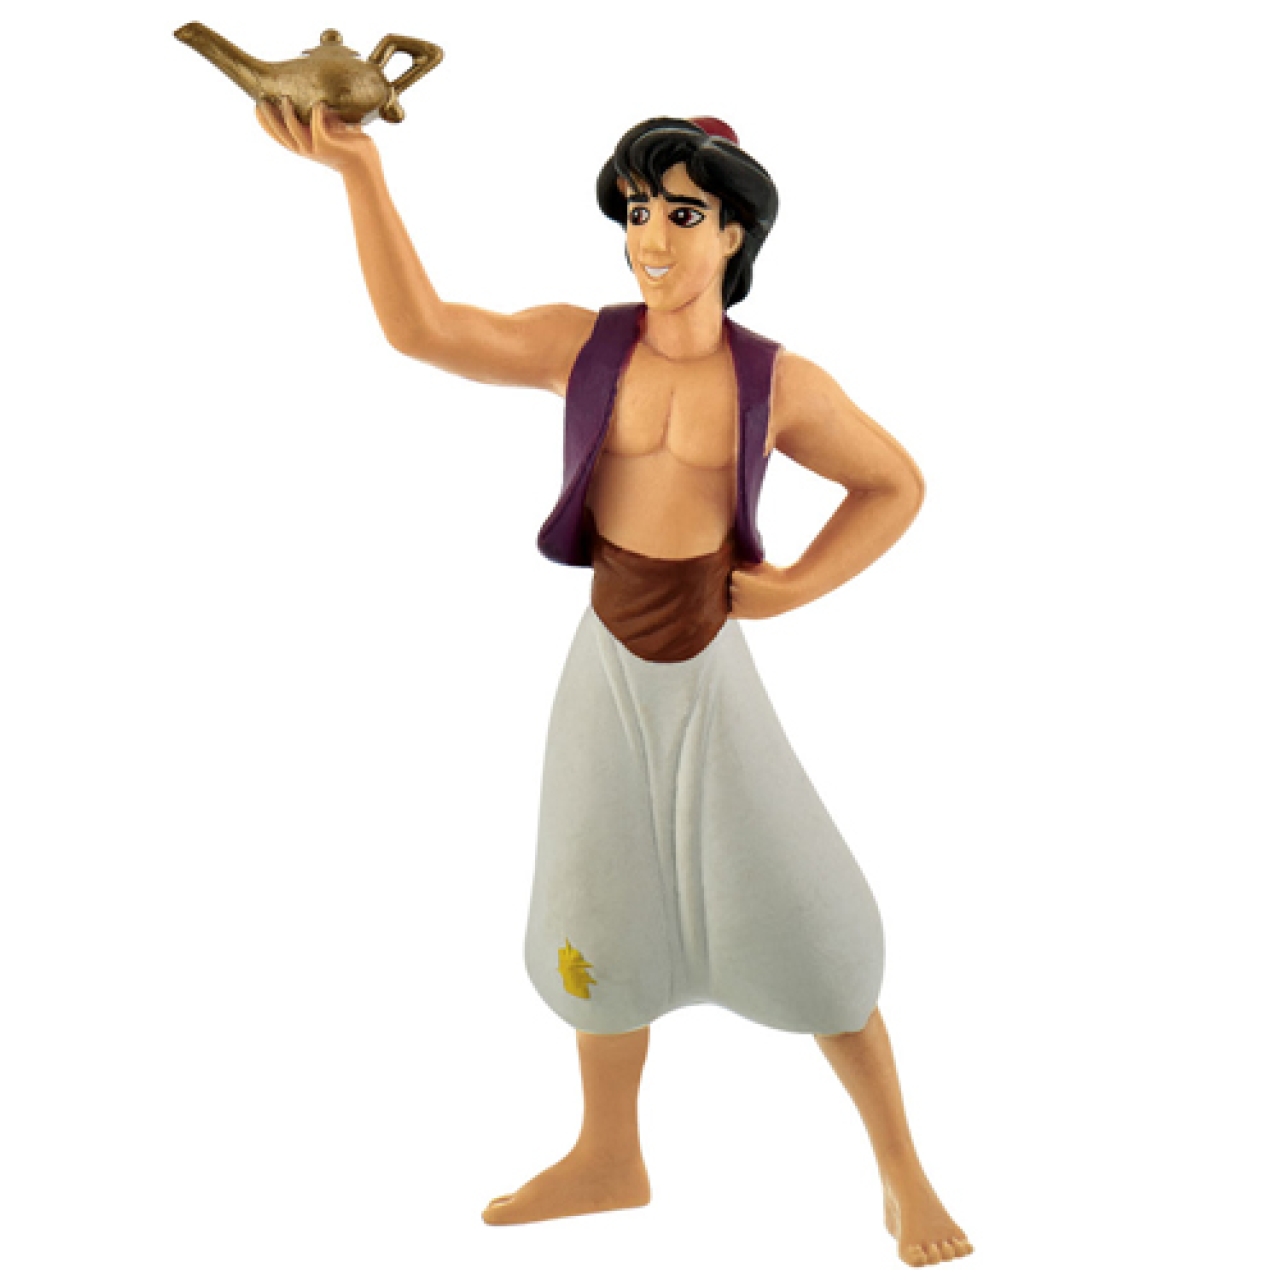 Tortenfigur "Aladdin", ca 12,5 cm